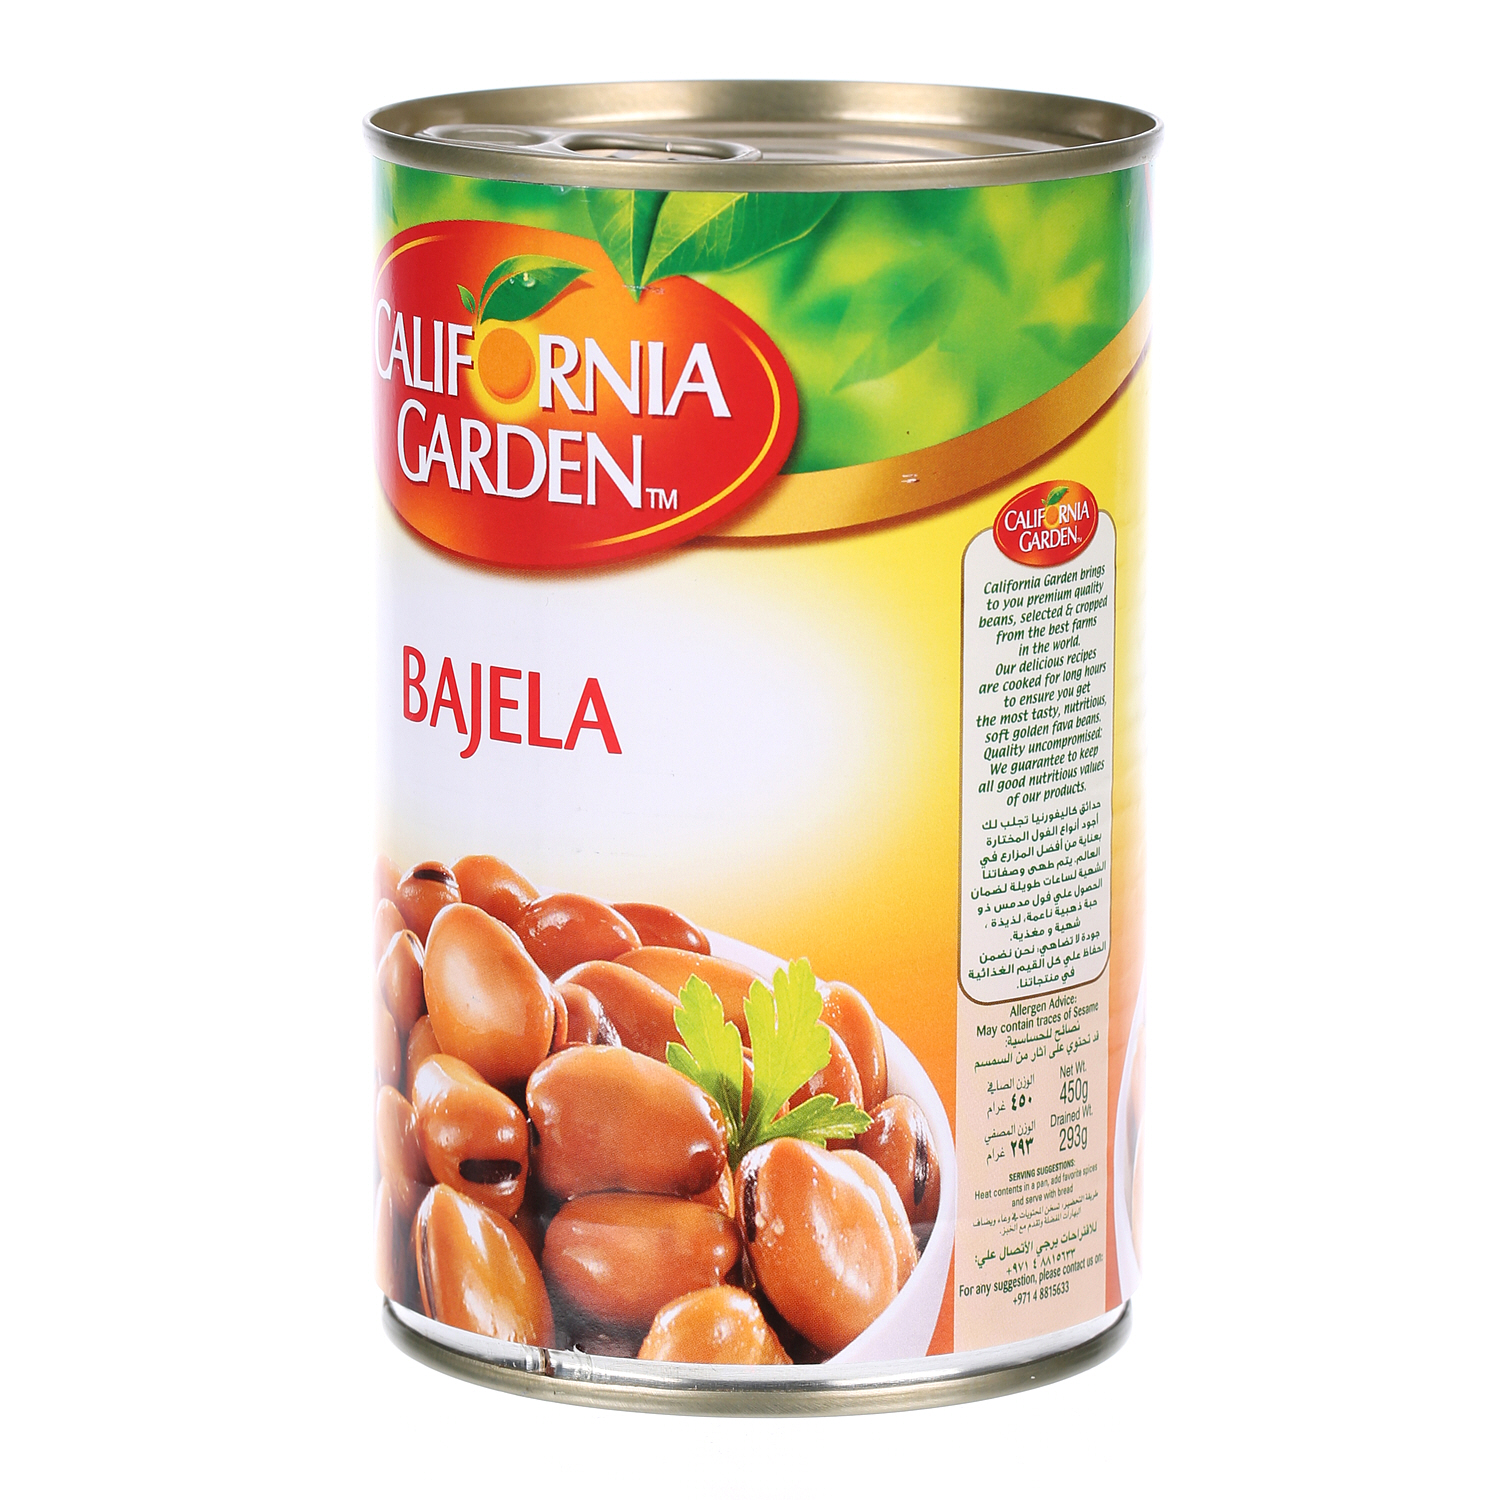 California Garden Bagella Broad Beans 450 g